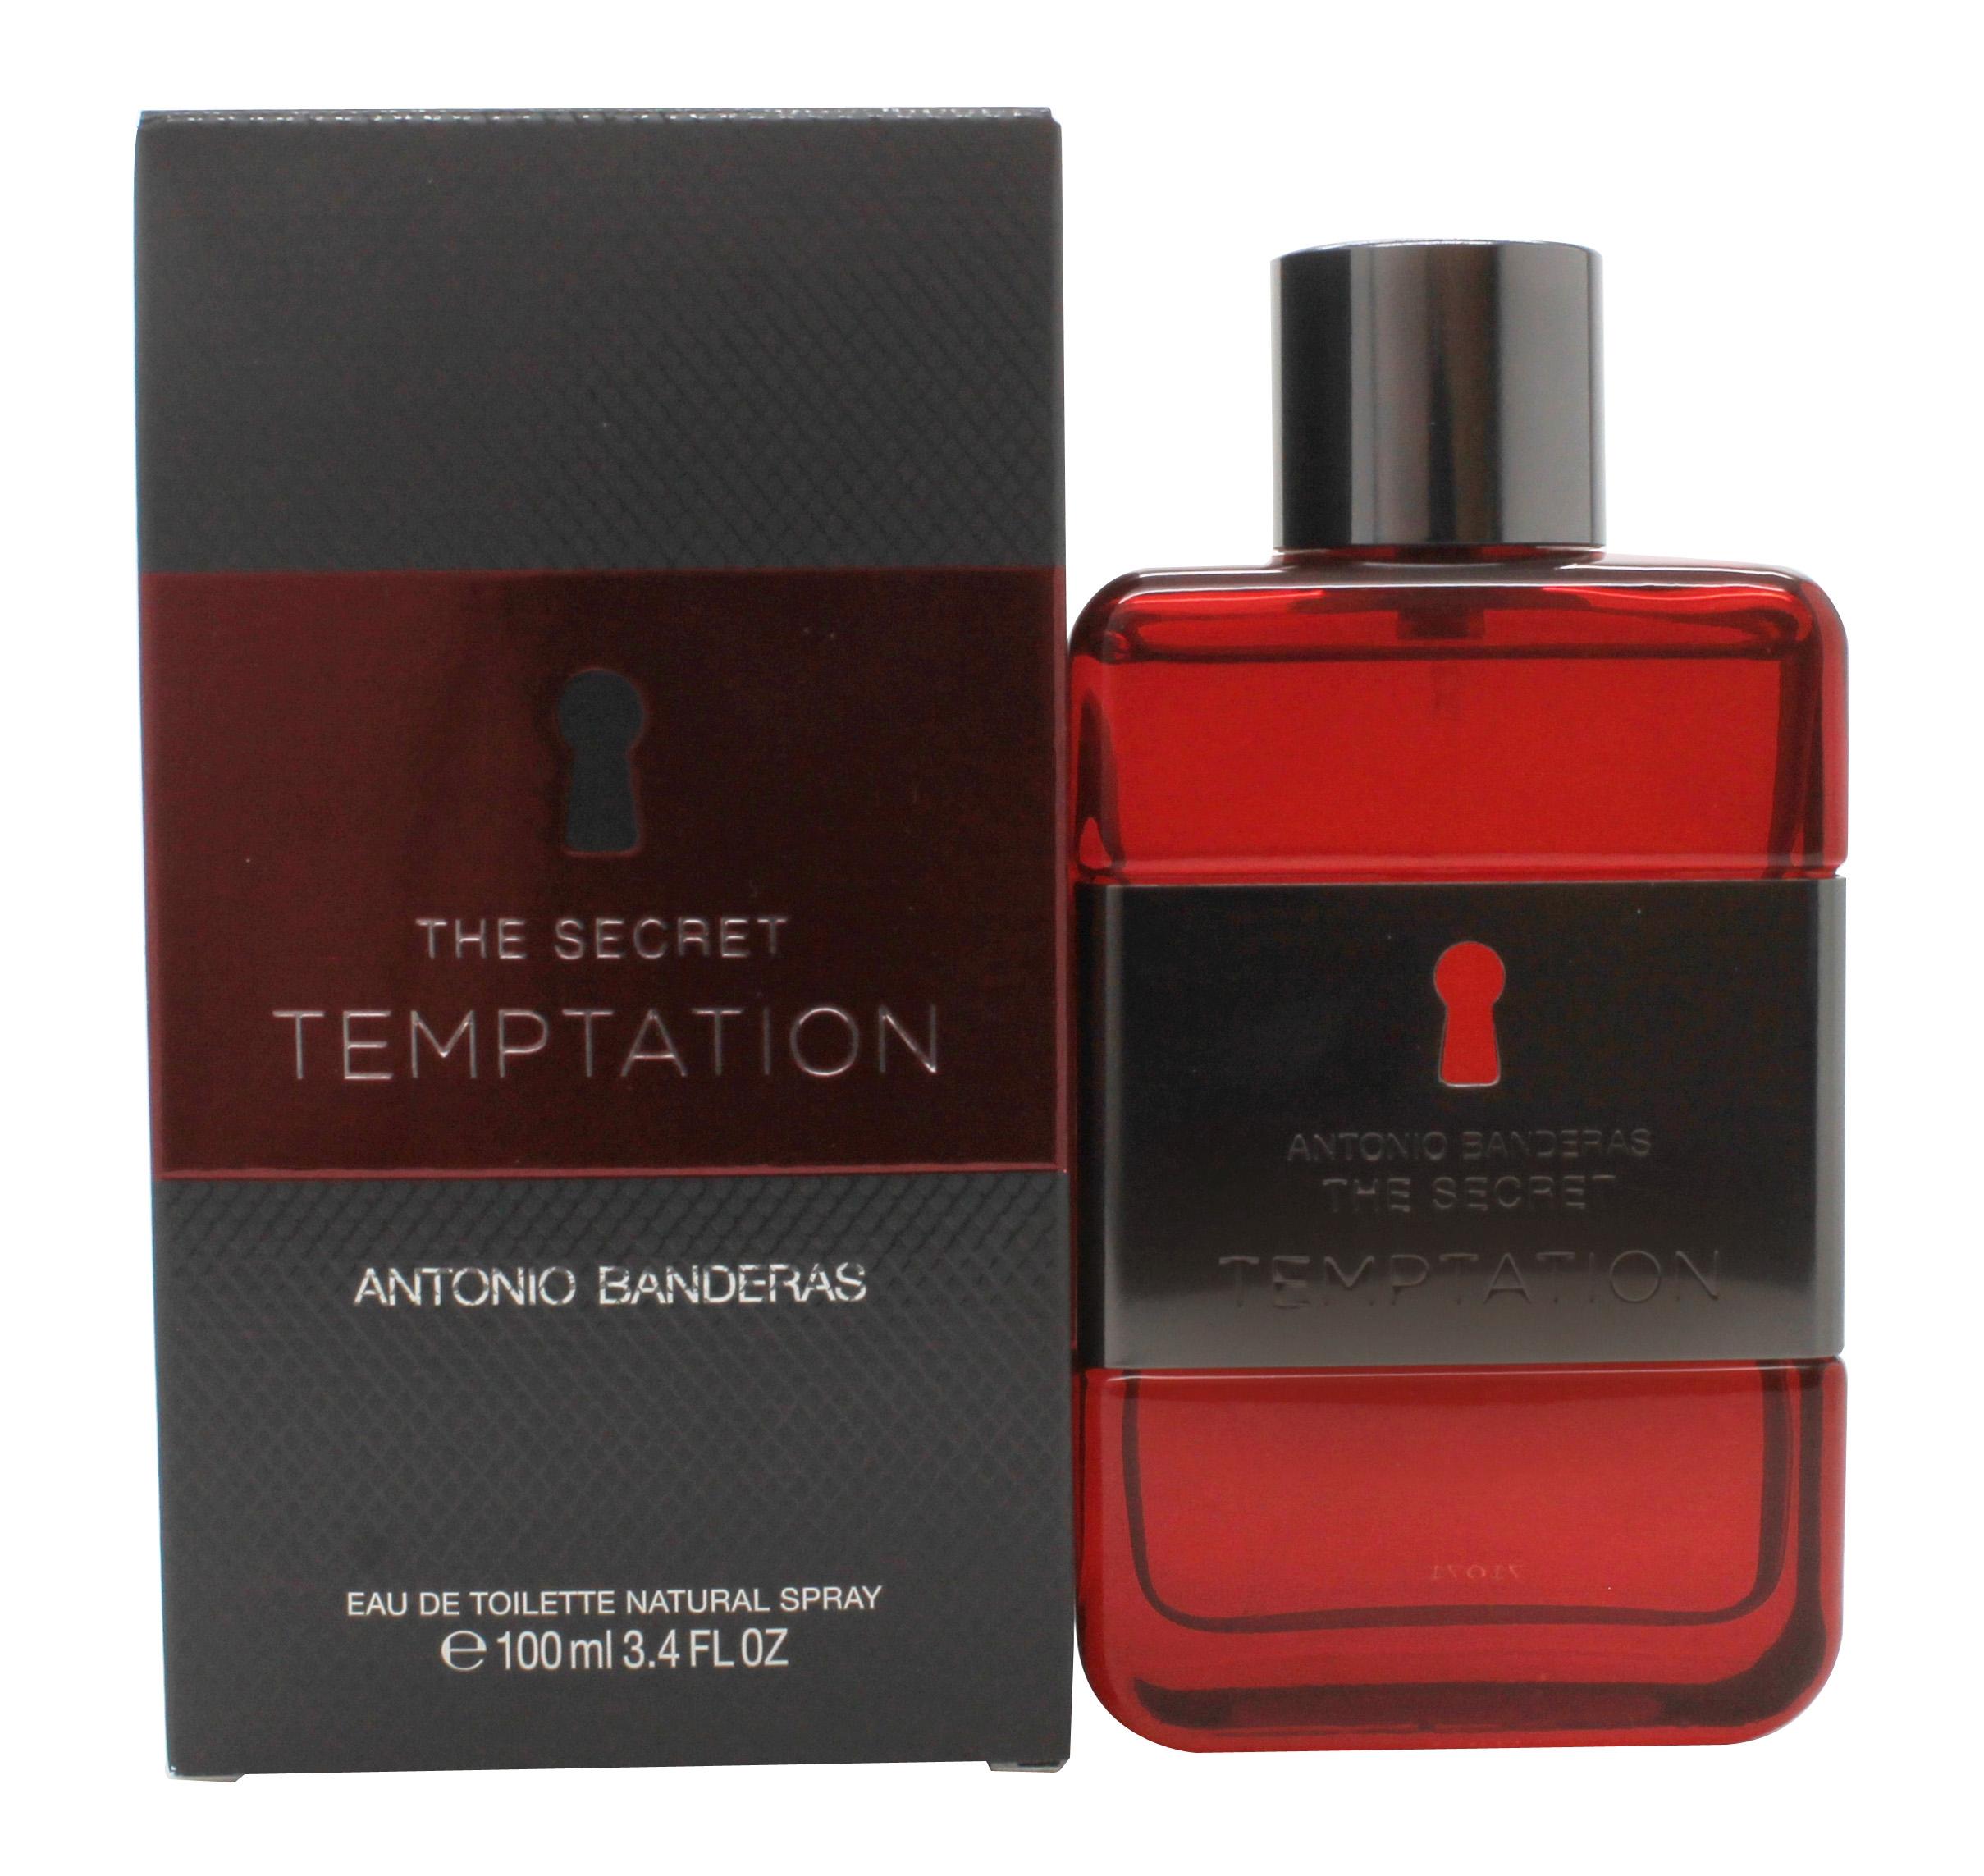 Antonio Banderas The Secret Temptation Eau de Toilette 100ml Spray